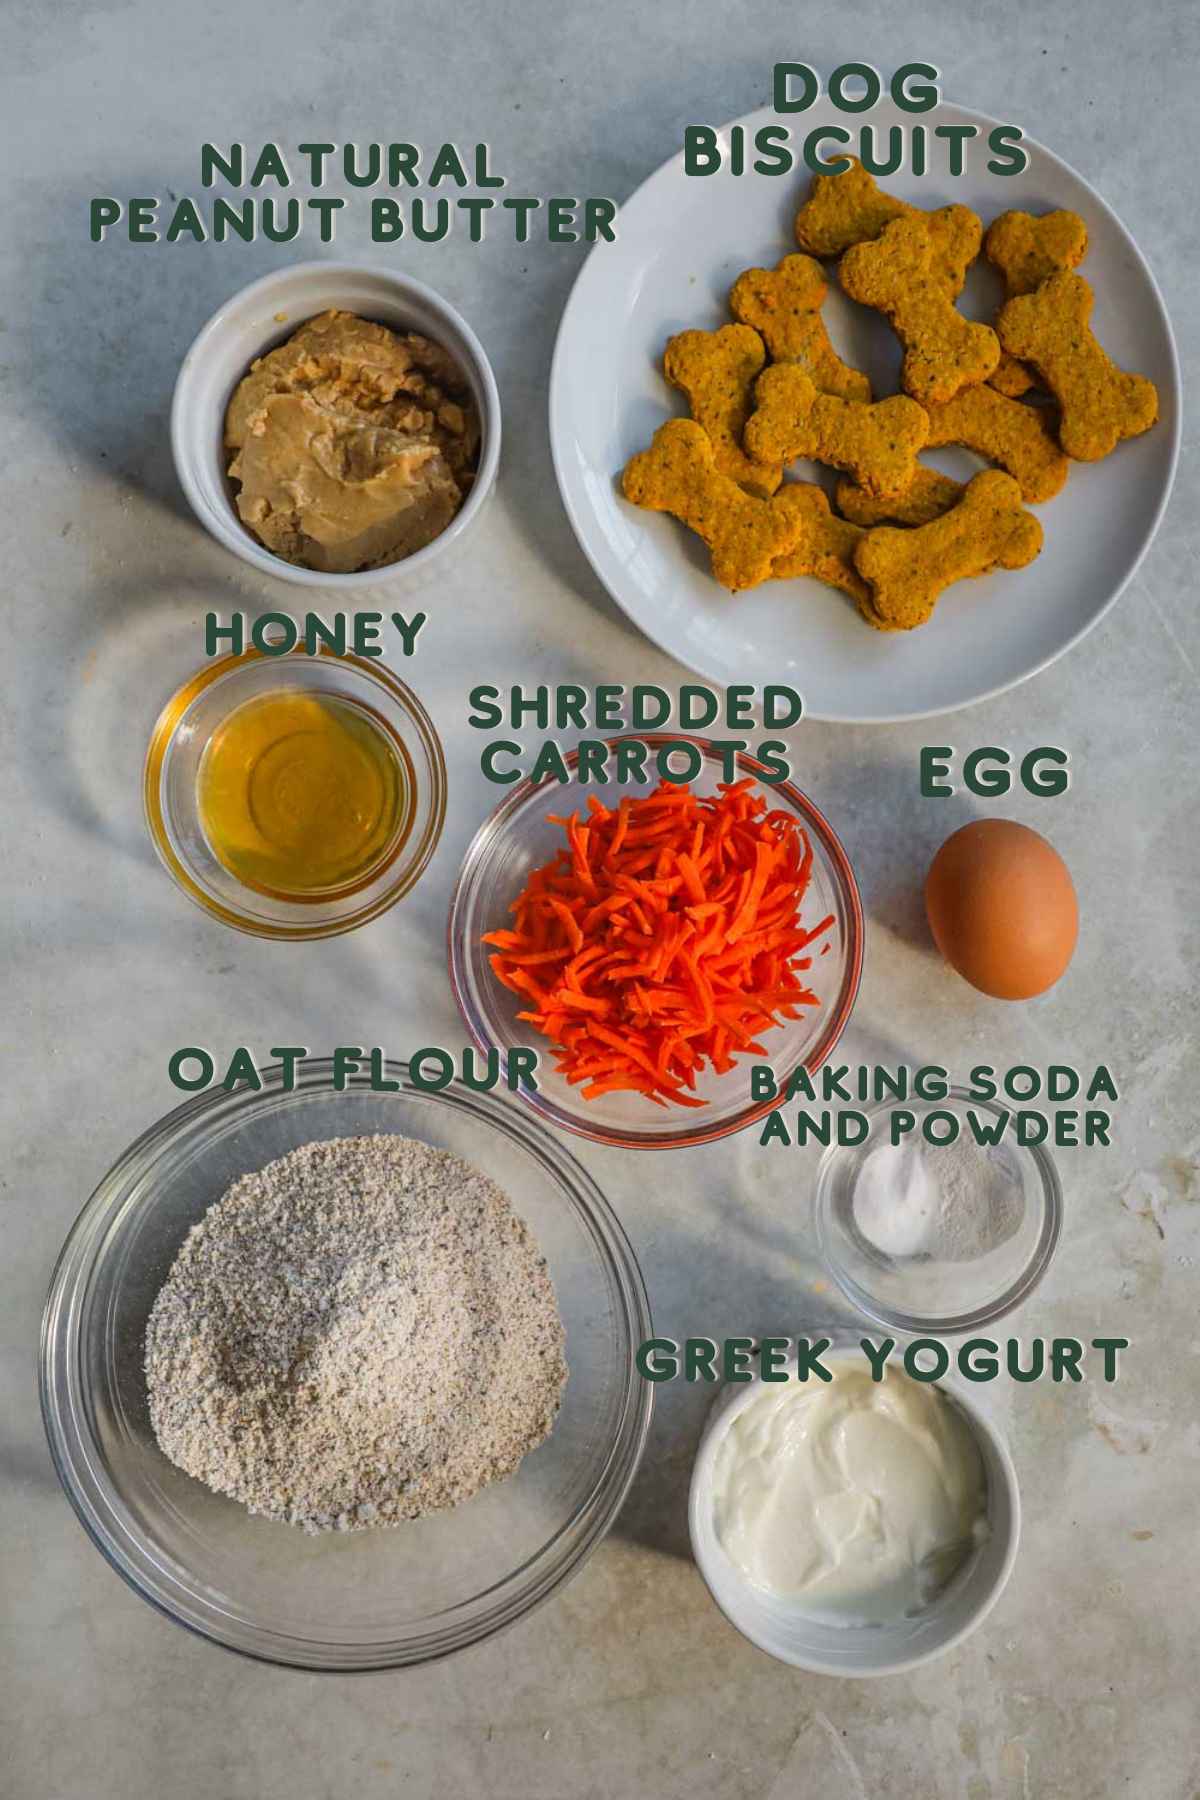 Ingredients to make pupcakes, shredded carrots, natural peanut butter, honey, oat flour, egg, baking soda, baking powder, greek yogurt, dog biscuits.